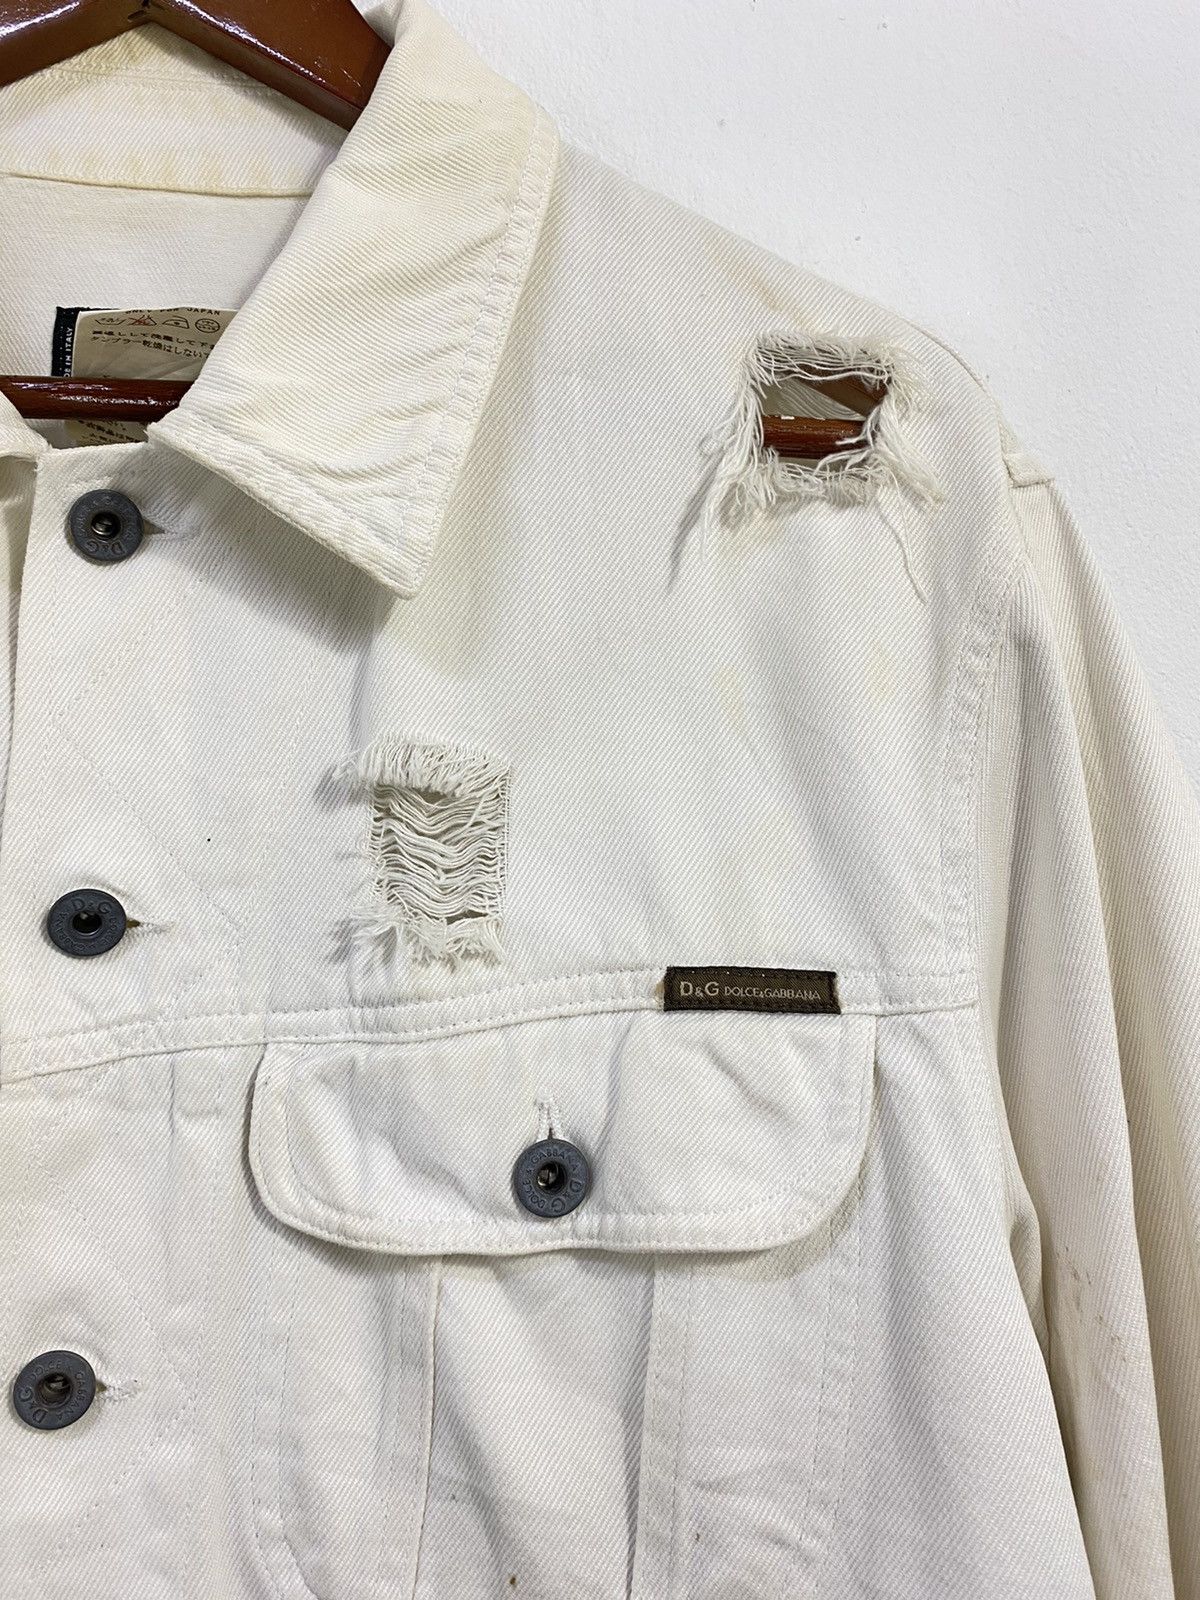 Dolce and Gabbana Cropped Jacket Destressed Denim Jacket - 3